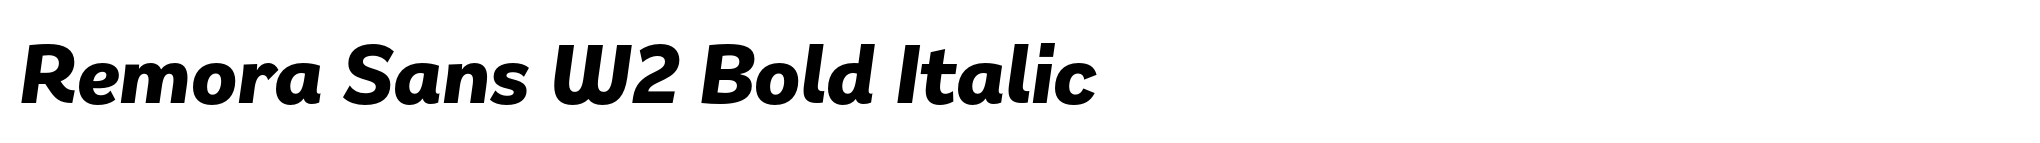 Remora Sans W2 Bold Italic image